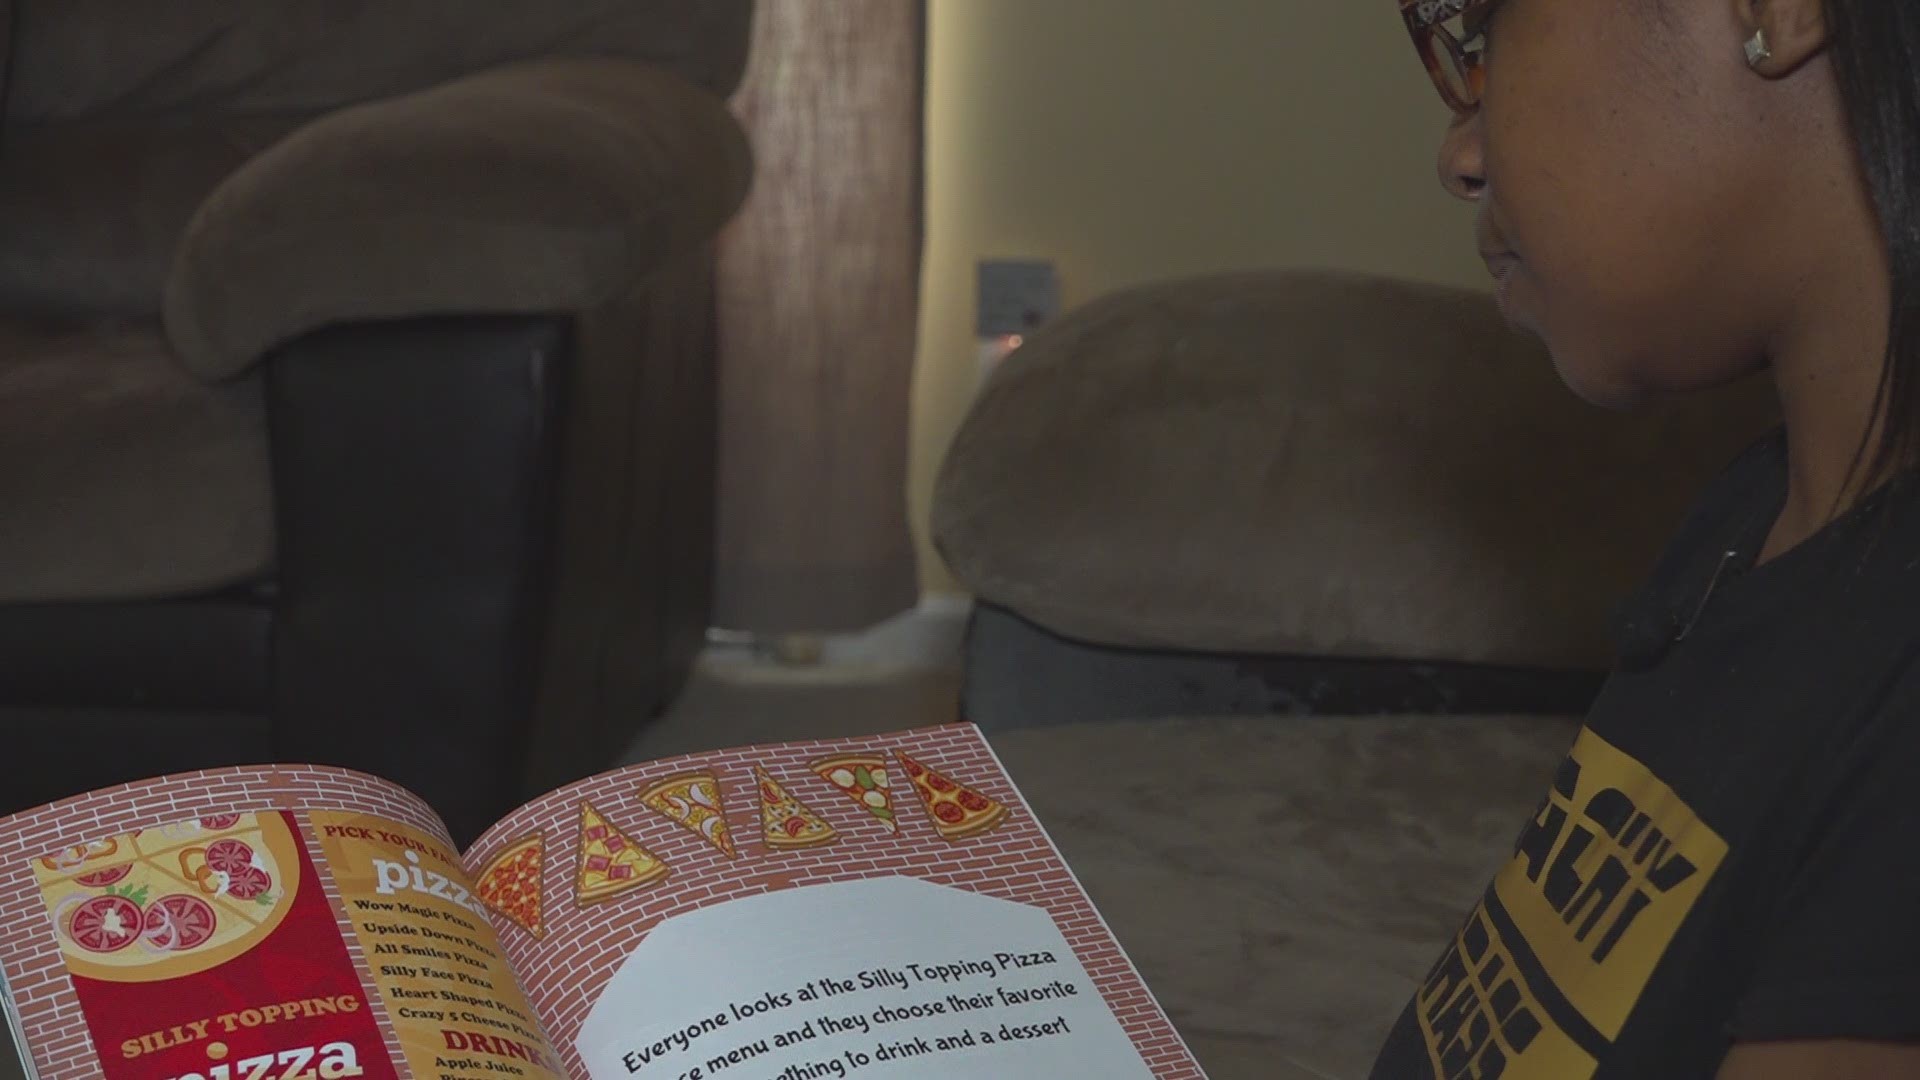 Local author Latasha Parkmond creates books that feature the names of their children